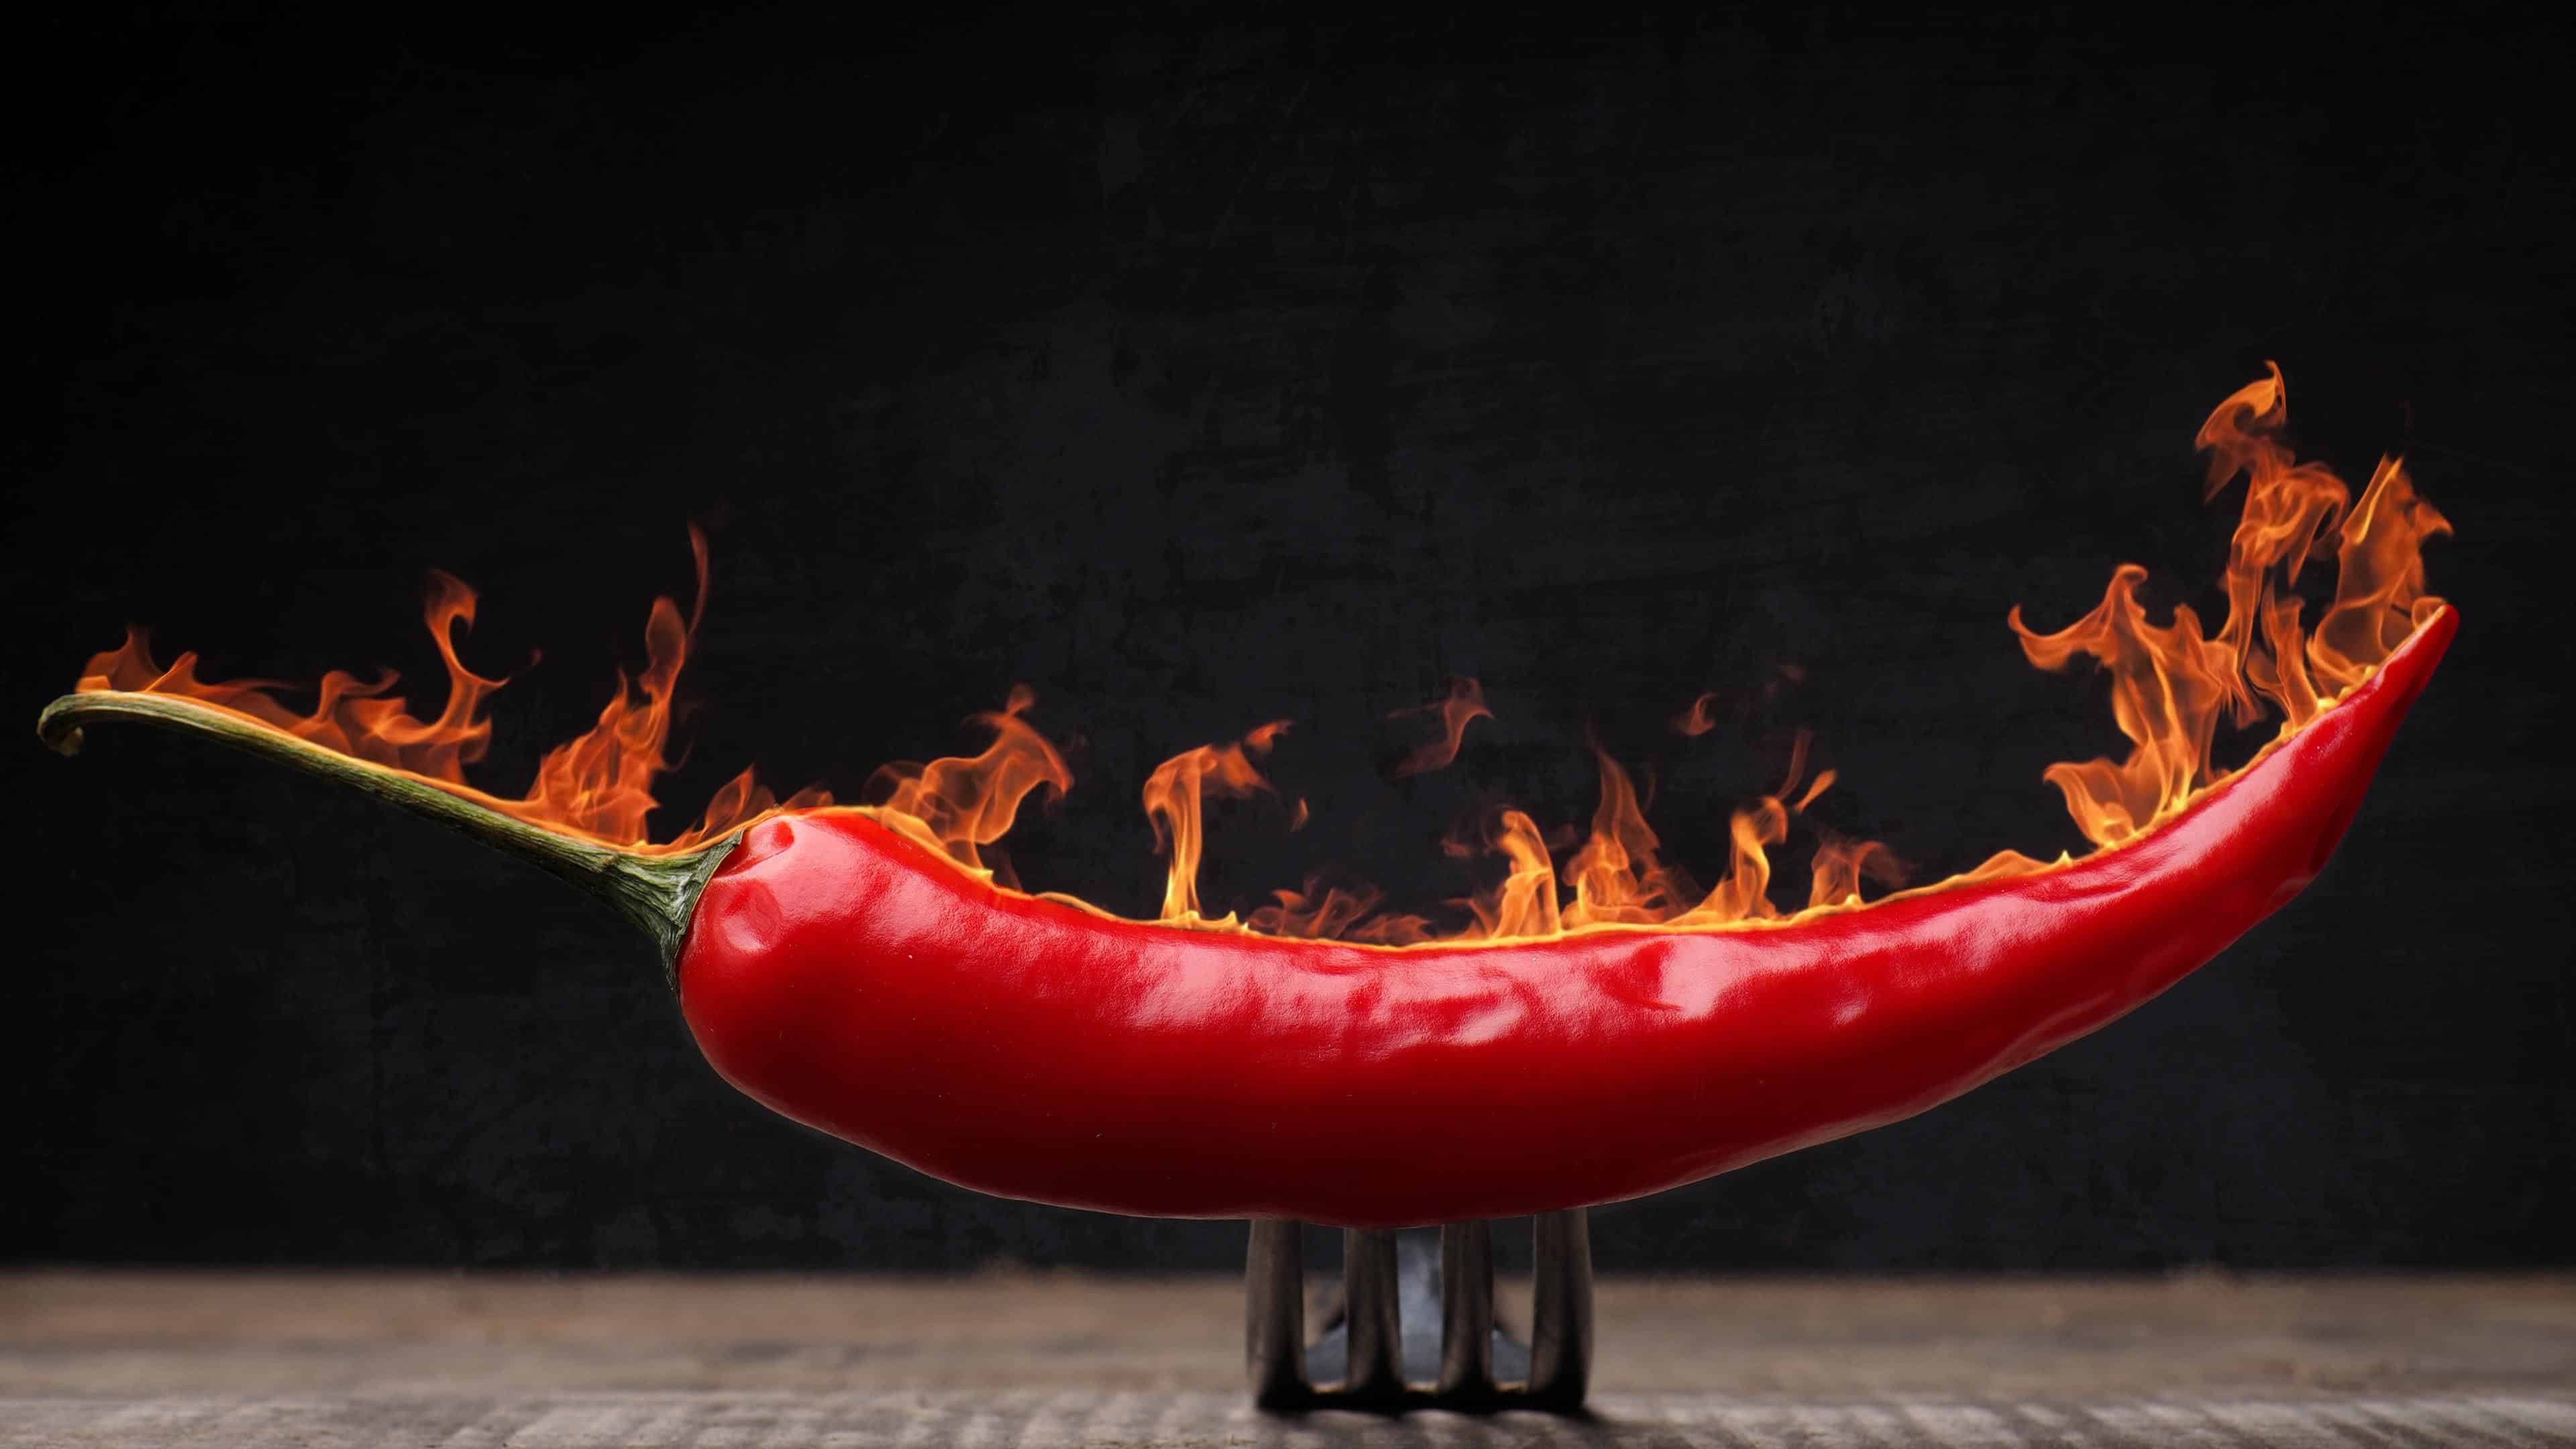 Chili Pepper On Fire UHD 4K Wallpaper - Pixelz.cc